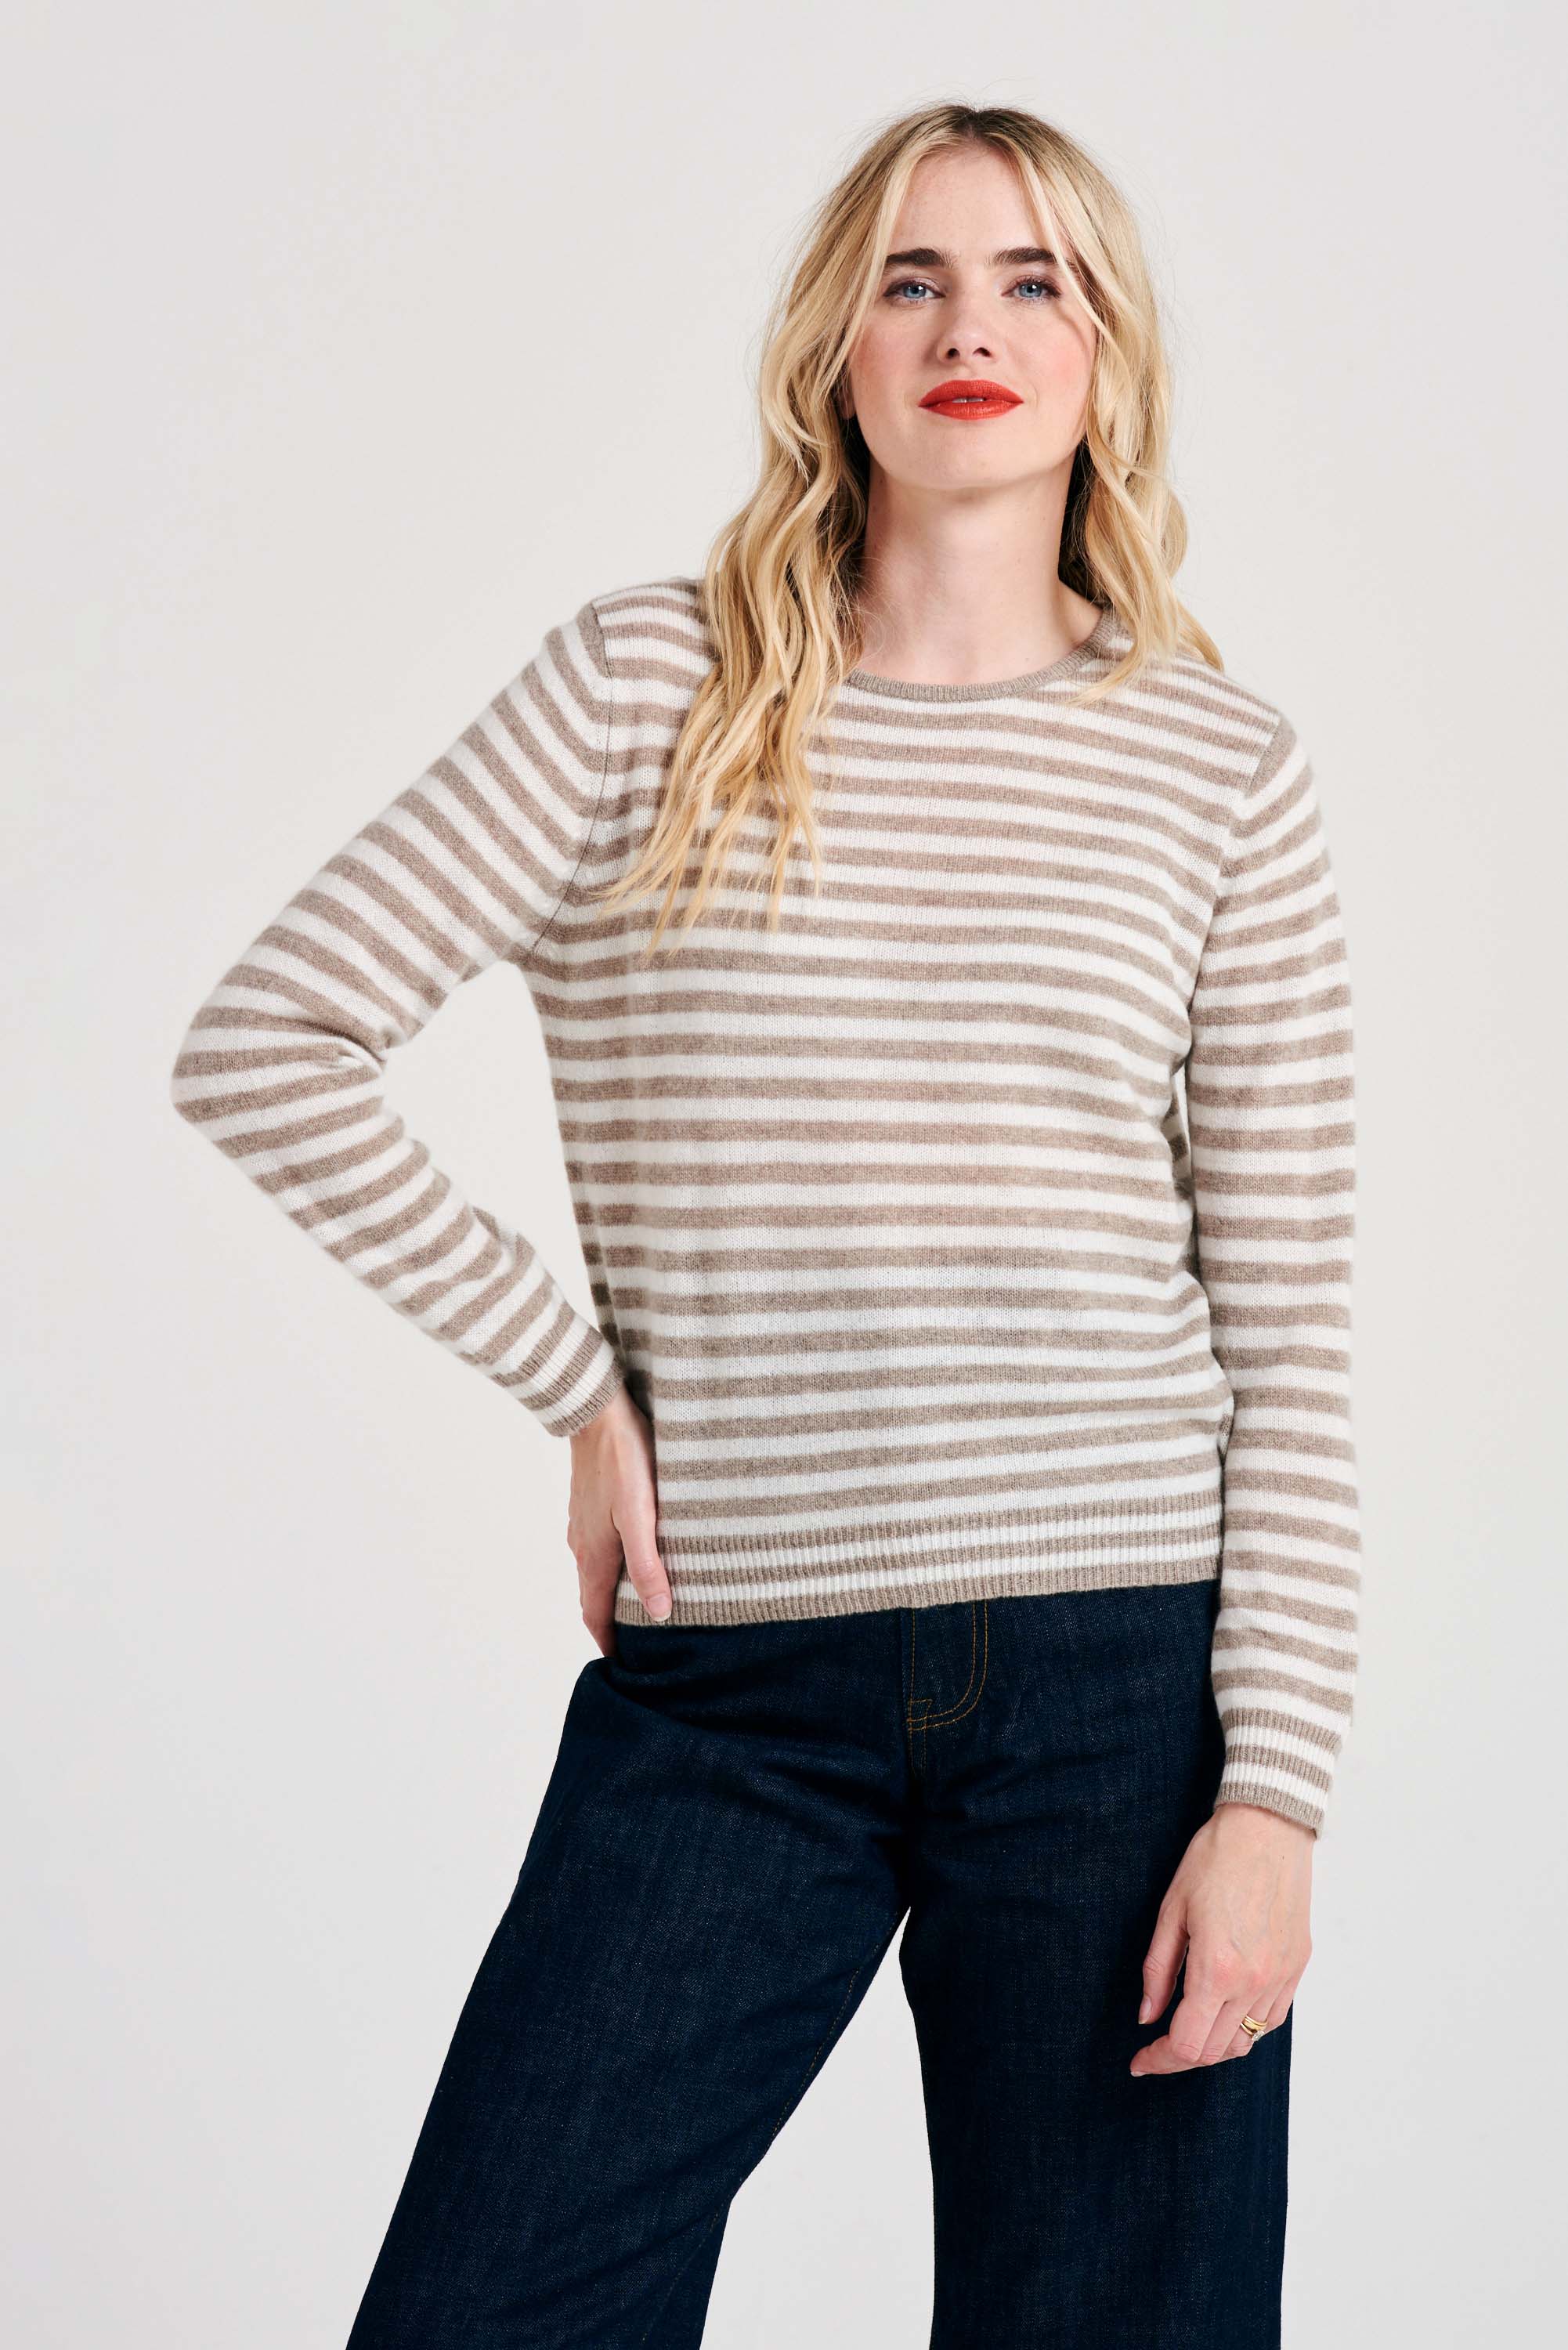 Blonde female model wearing Jumper1234 Little stripe cashmere crew neck jumper in organic light brown and cream